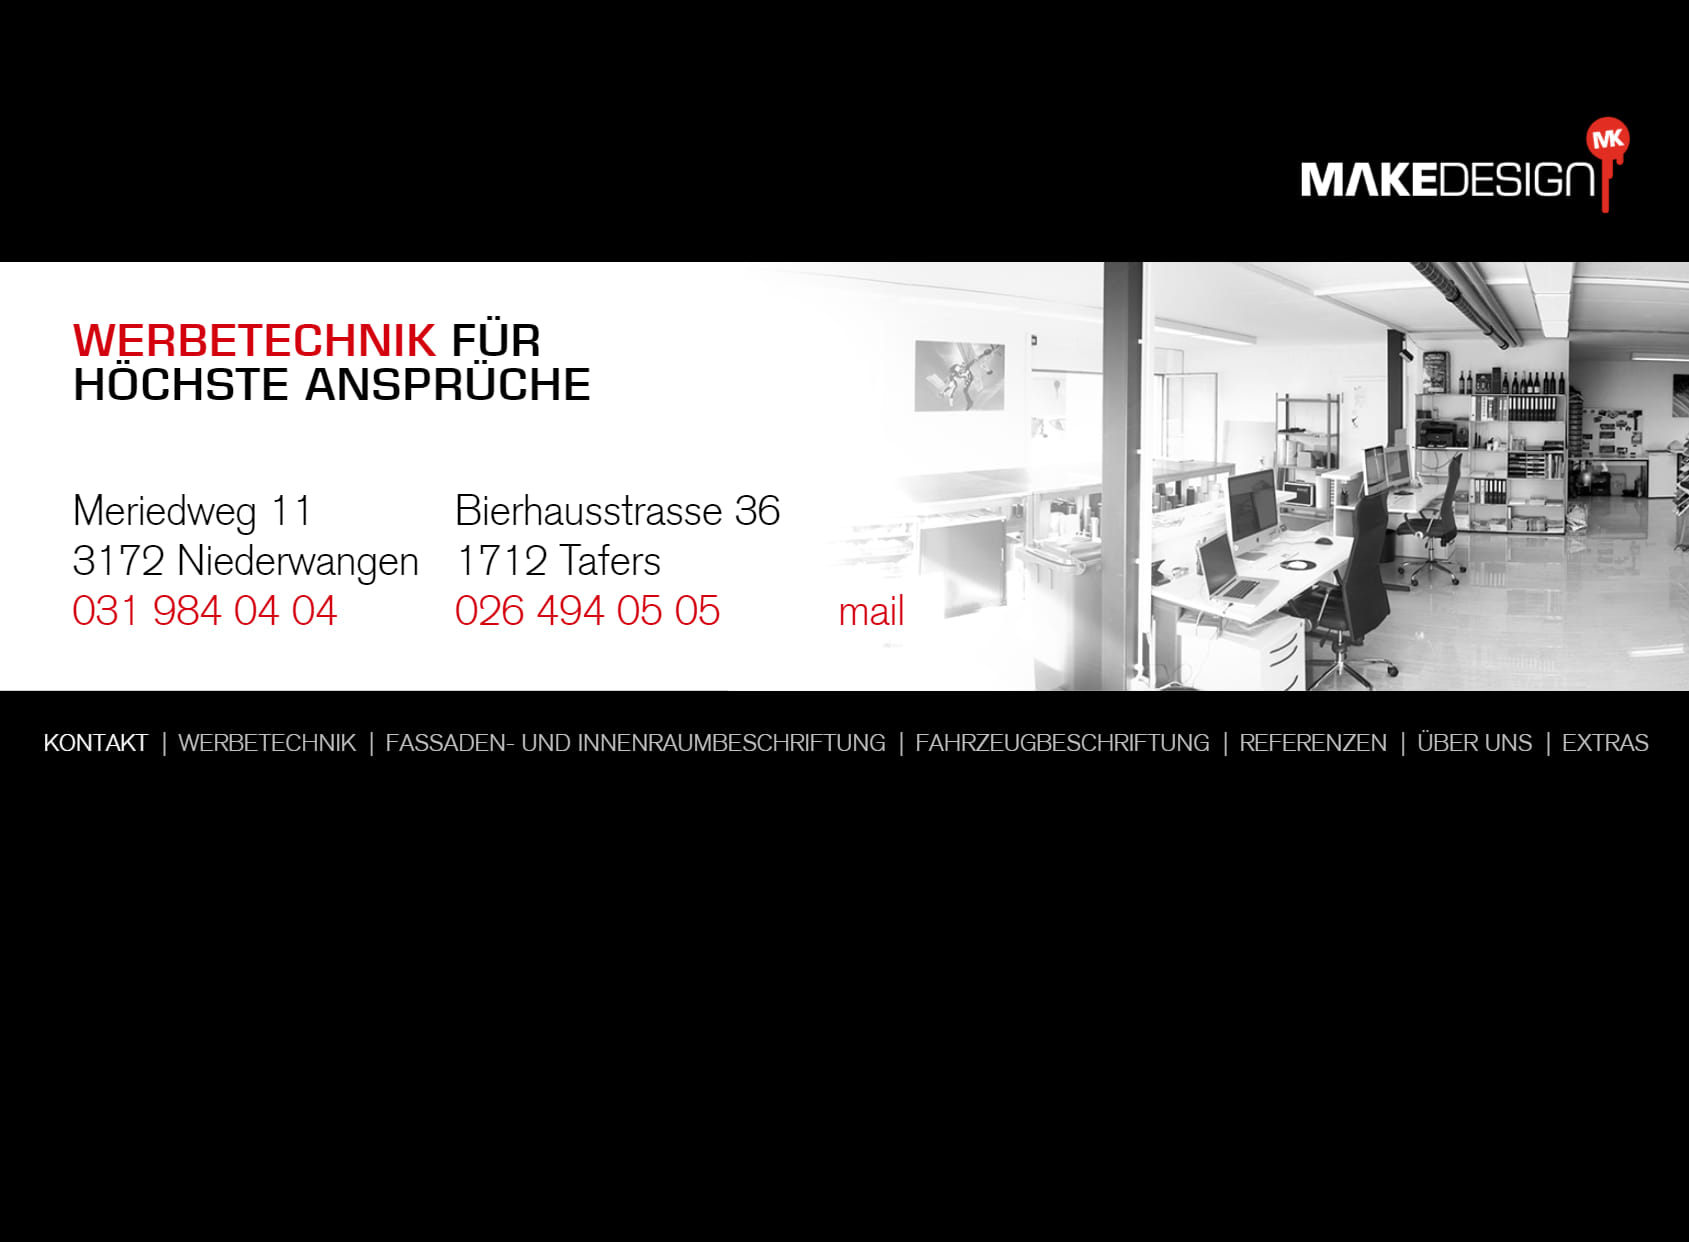 Makedesign GmbH